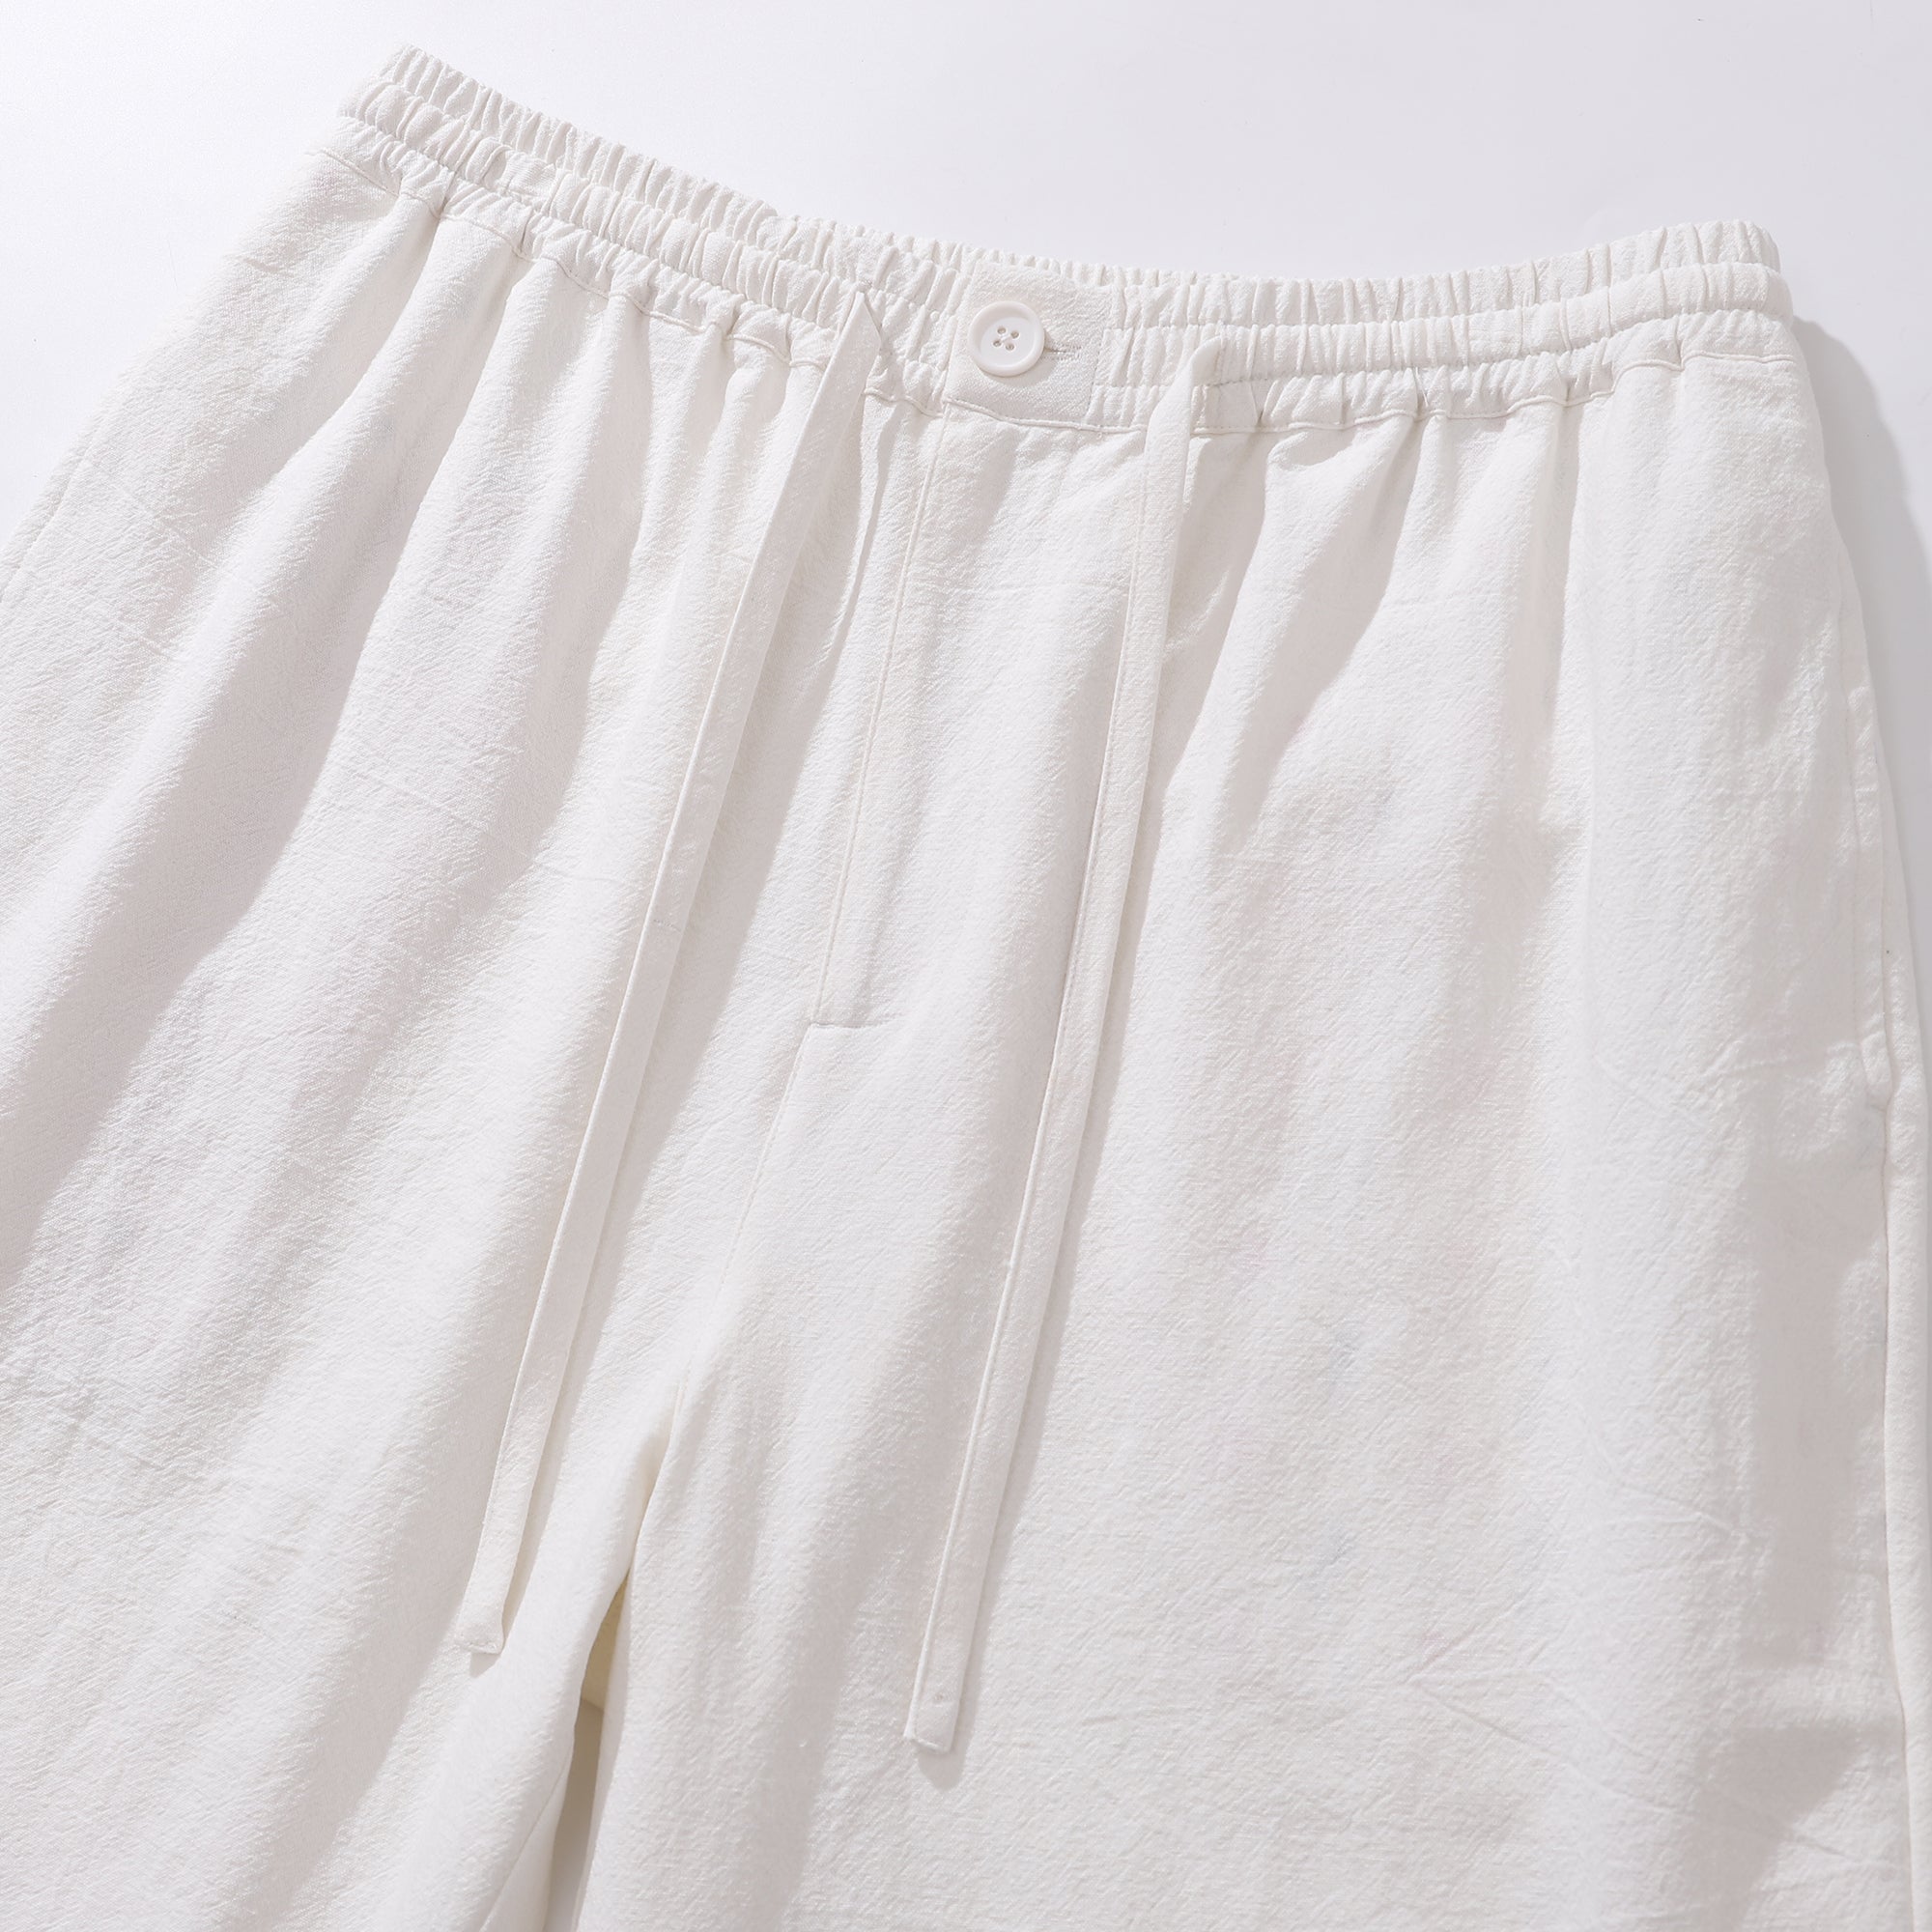 Mens Linen Shorts Mid-Rise Straight Bermuda 8-10 Inch Shorts - WHITE Version 3.0